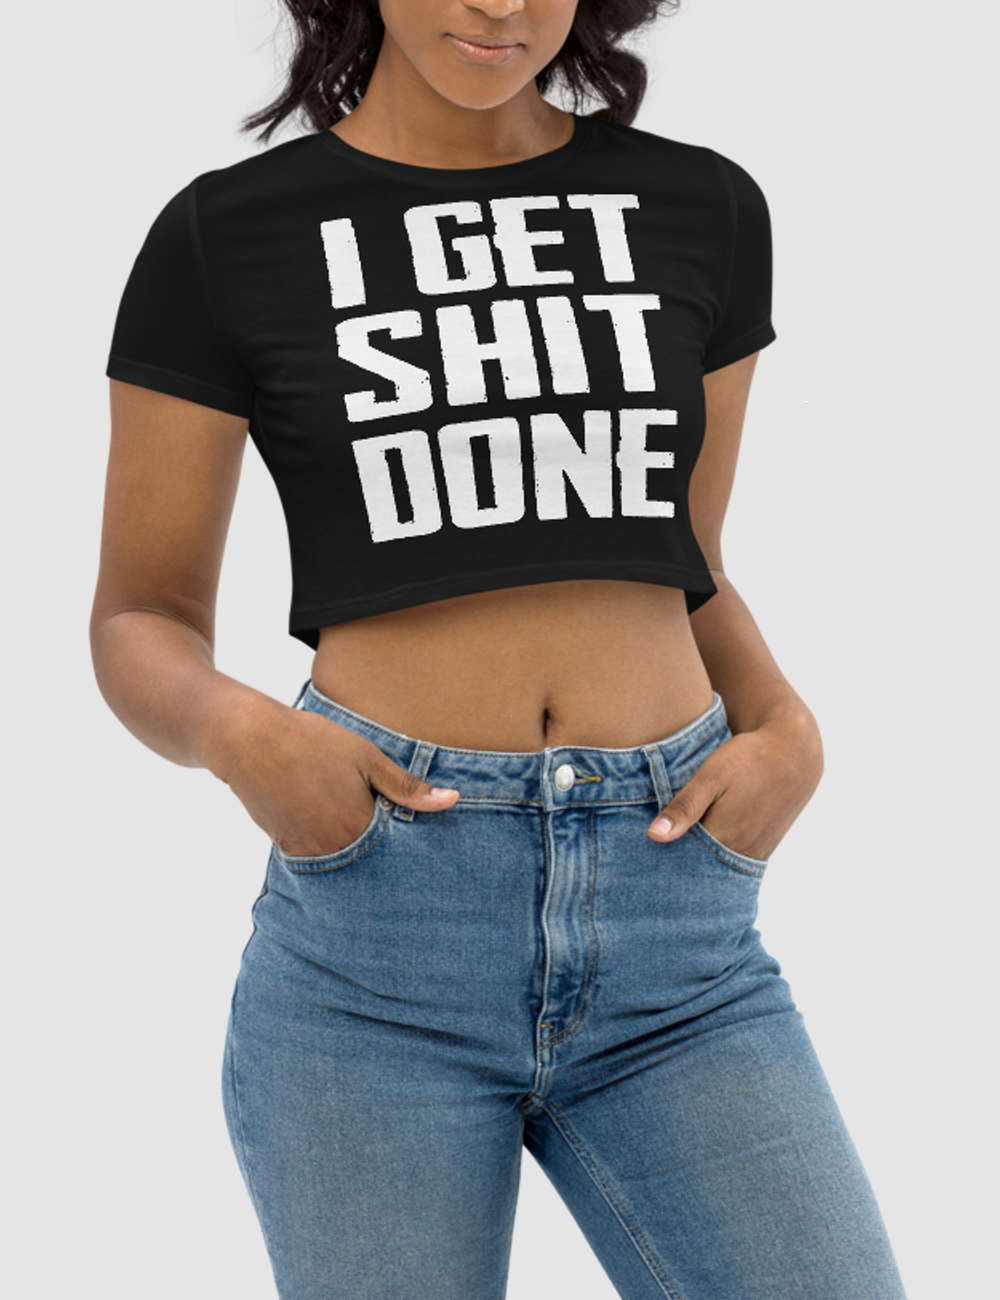 I Get Shit Done Women's Fitted Crop Top T-Shirt OniTakai